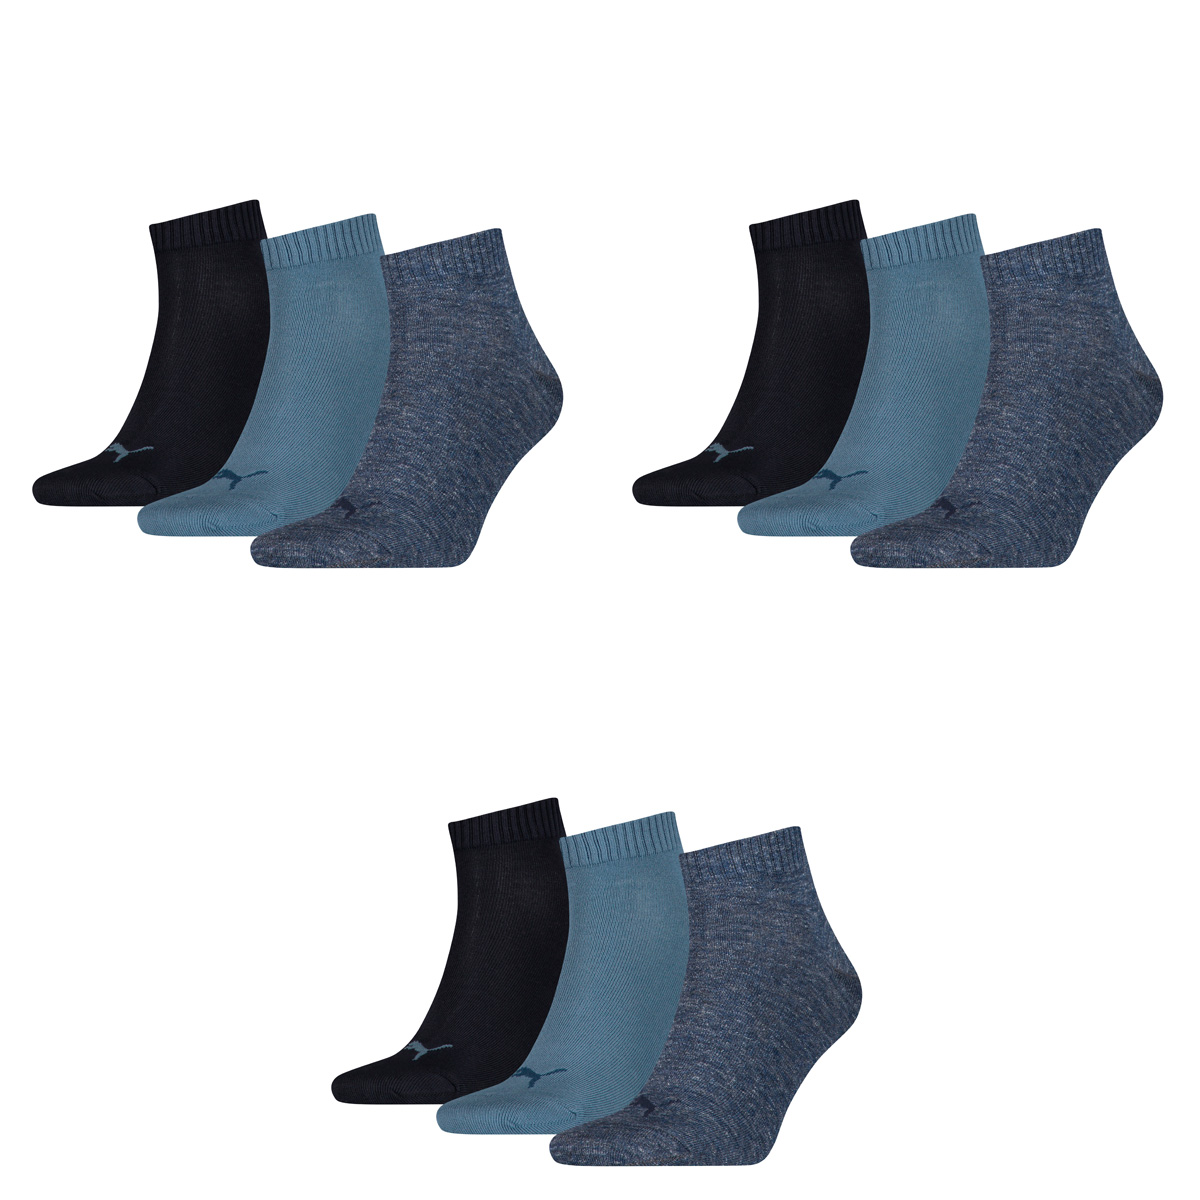 18 Paar Puma Unisex Quarter Socken Sneaker Gr. 35 - 49 für Damen Herren Füßlinge, Socken & Strümpfe:43-46, Farbe:460 denim blue